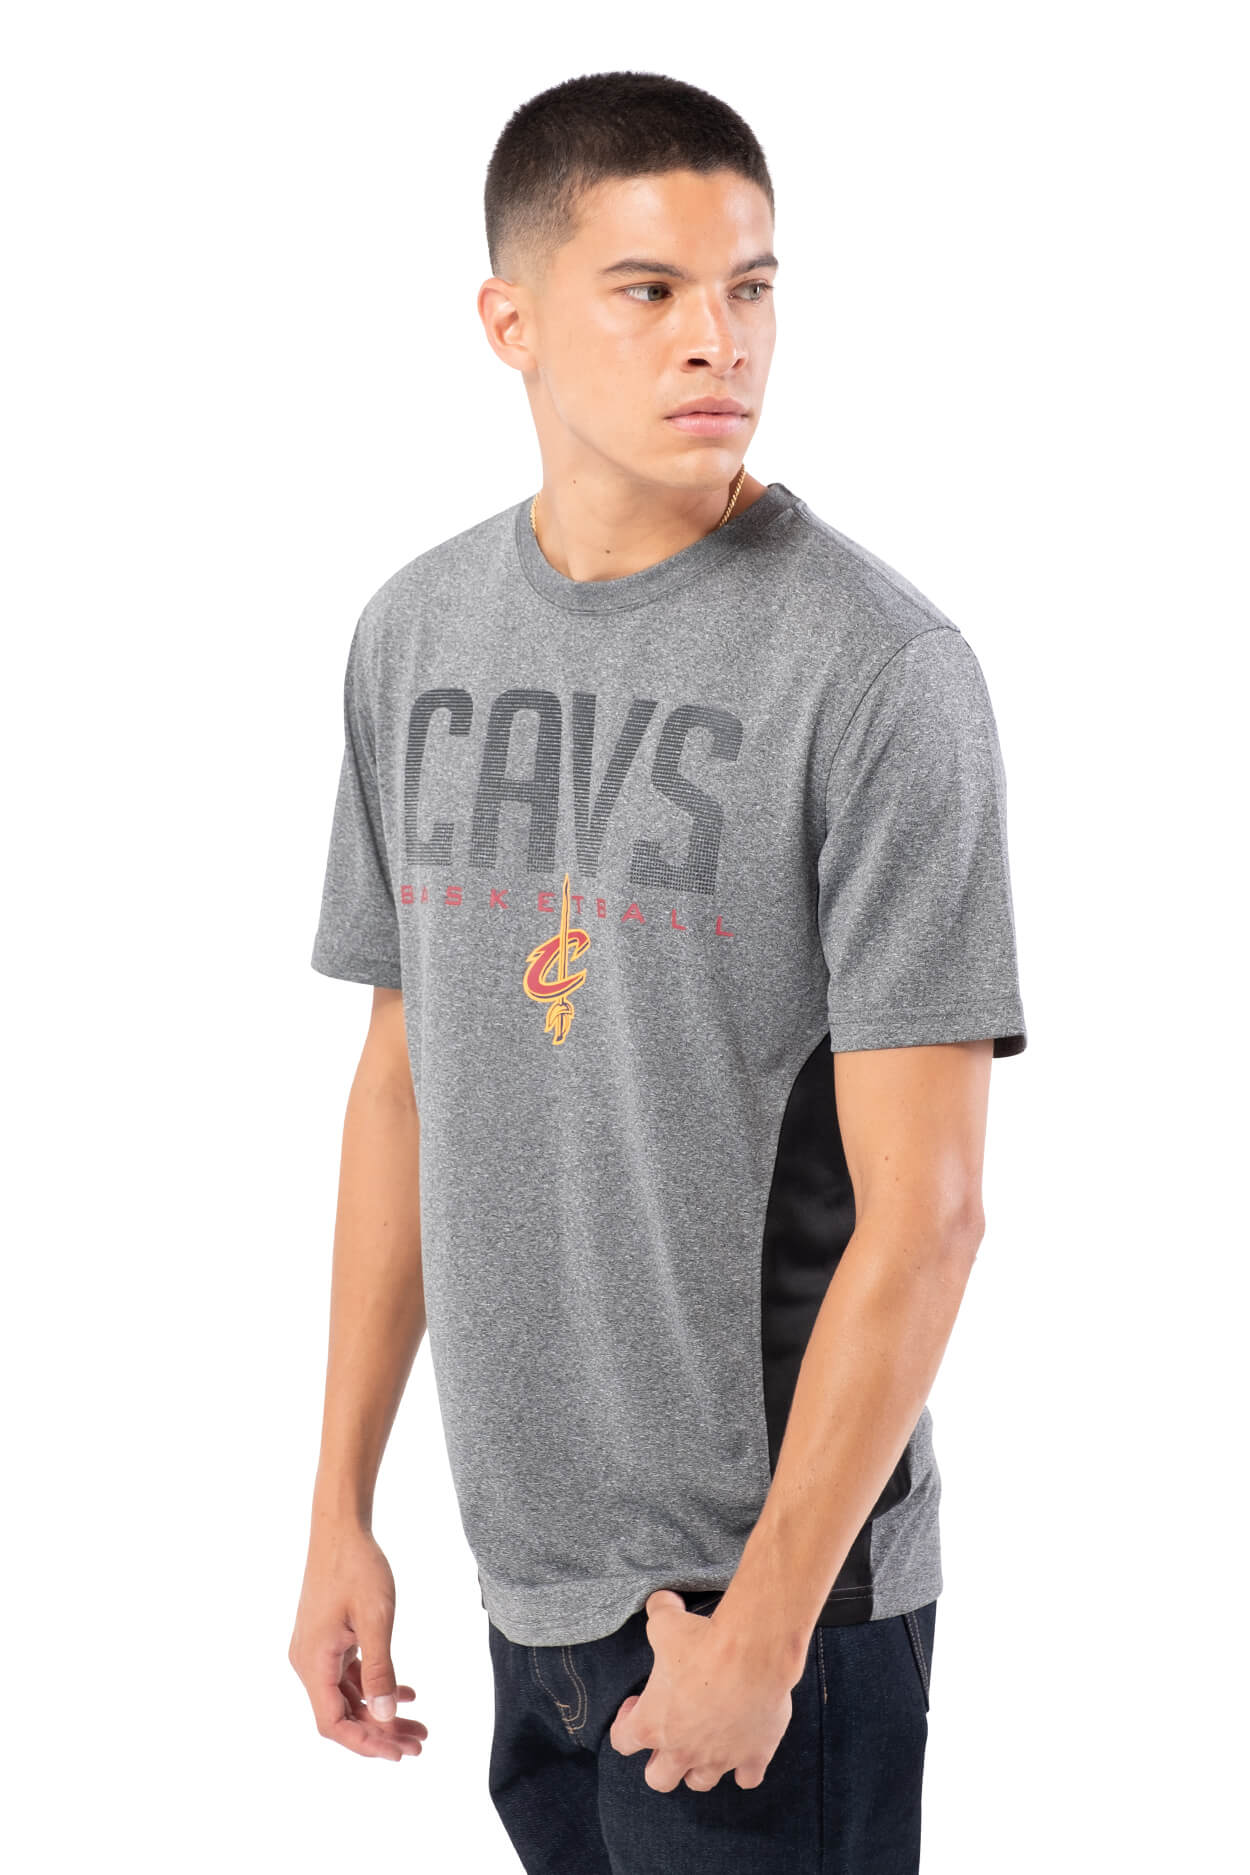 NBA Cleveland Cavaliers Men's Short Sleeve Tee|Cleveland Cavaliers